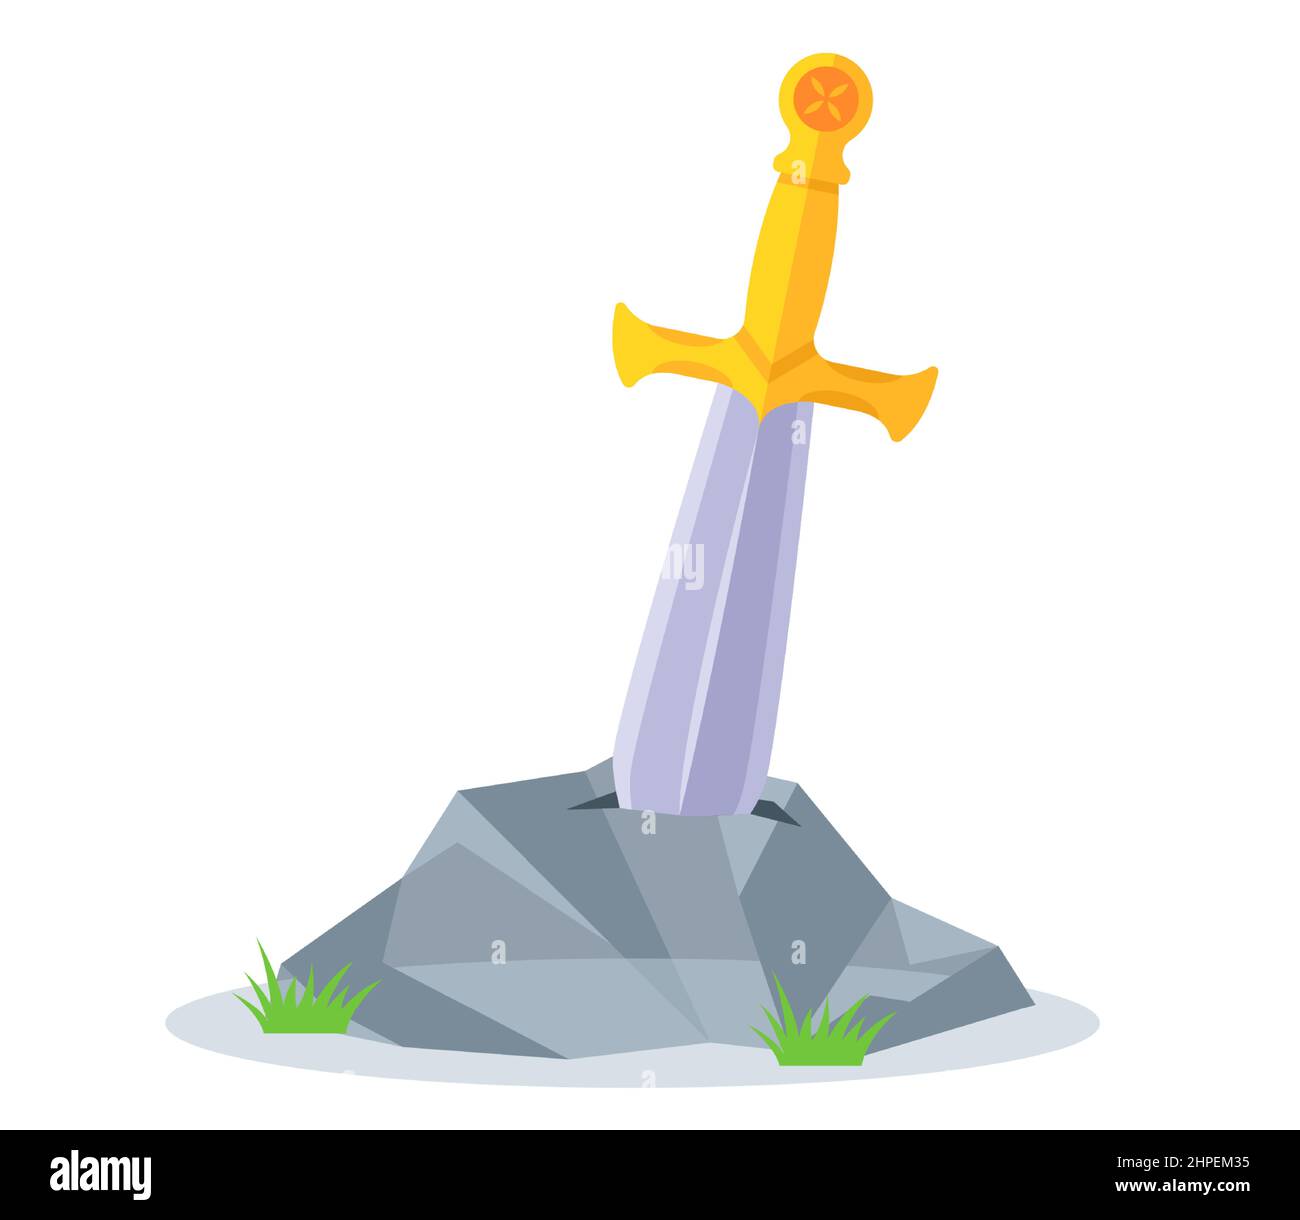 the sword is thrust deep into the stone. the myth of arthur. flat vector illustration. Stock Vector